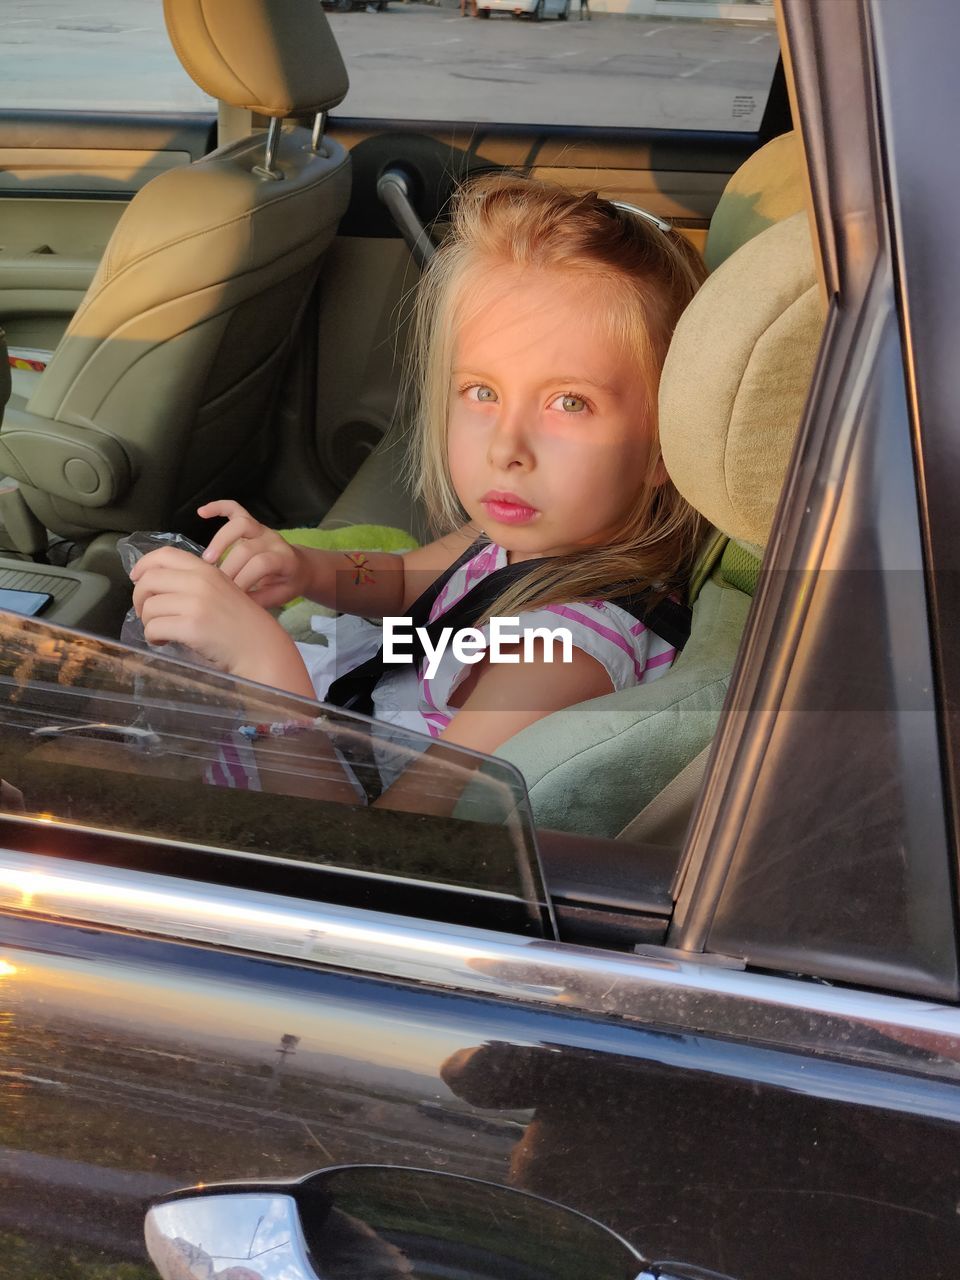 Portrait of girl sitting in car